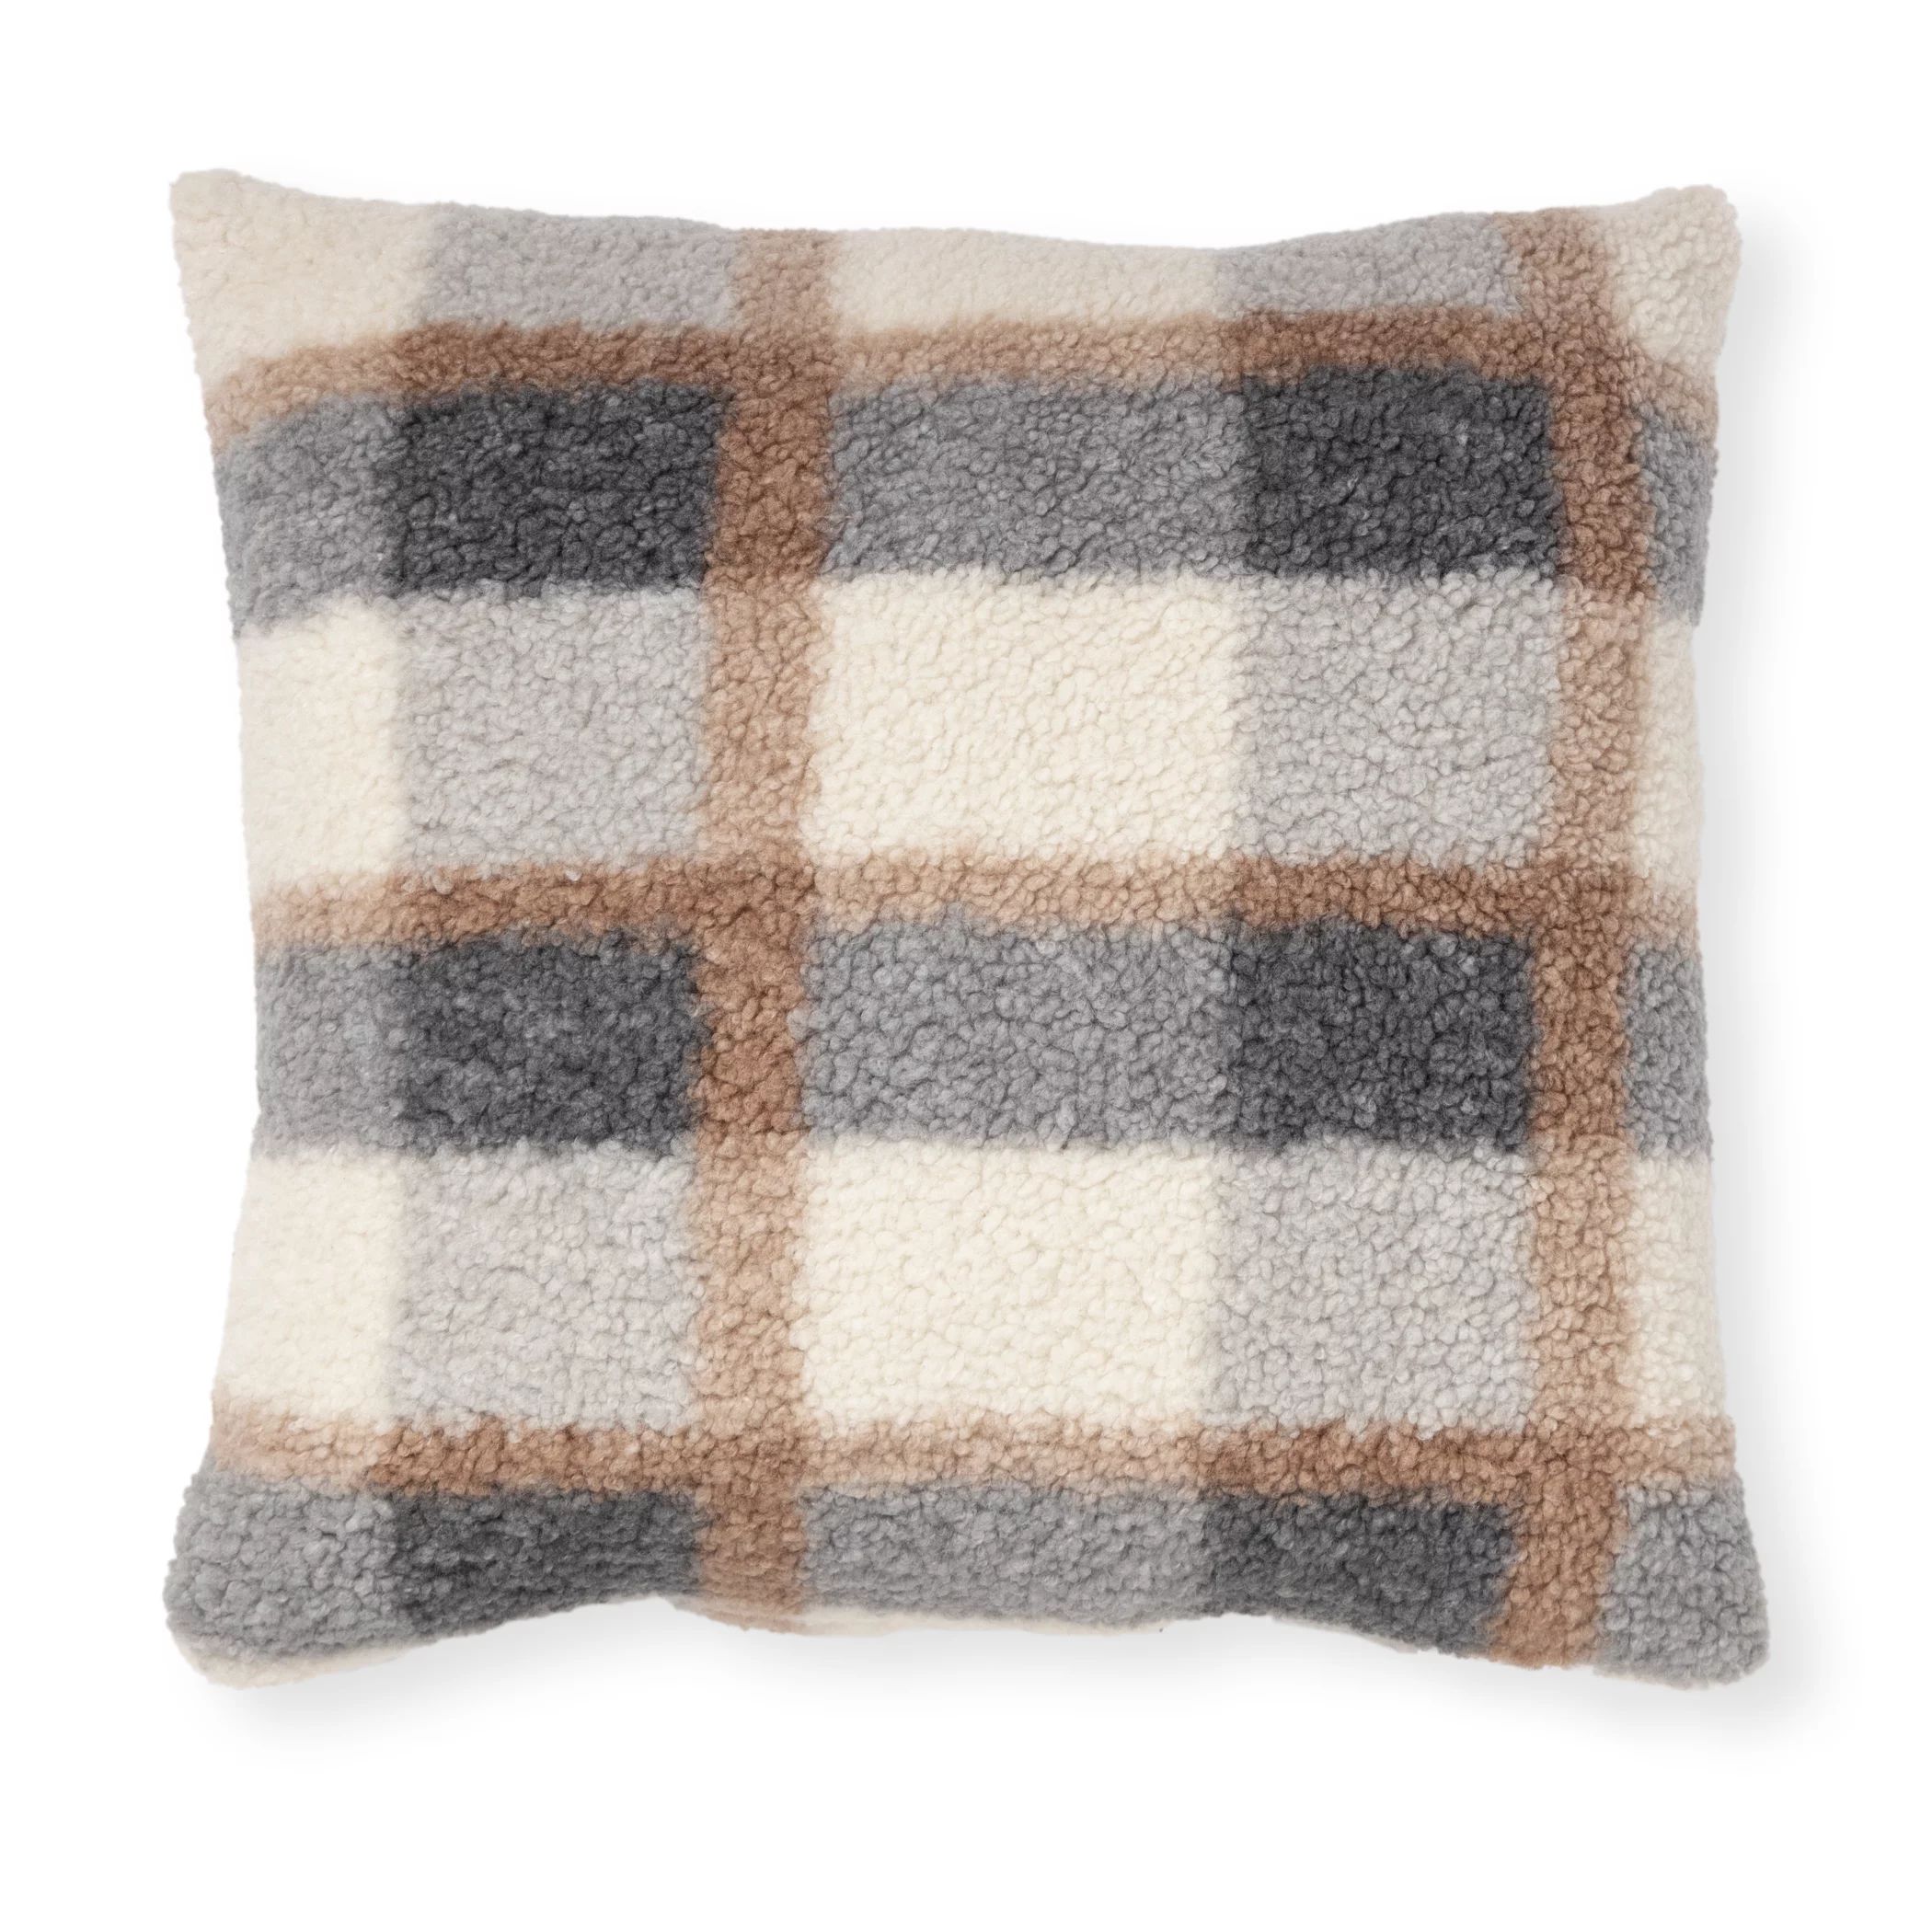 Mainstays Decorative Throw Pillow, Plaid, Multi, 18" Square, Single Pillow | Walmart (US)